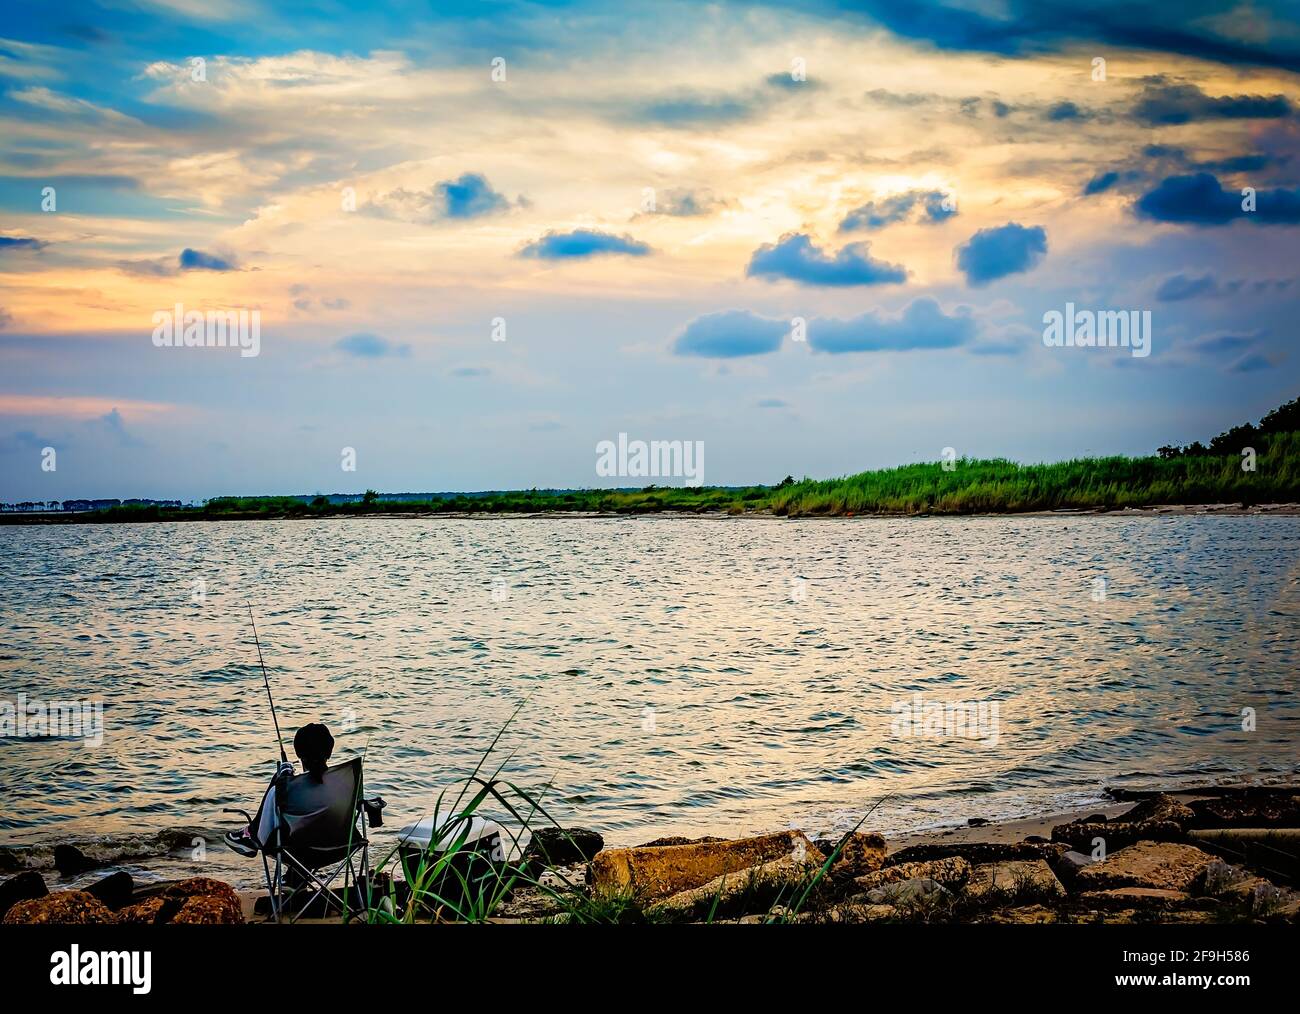 A man fishes at sunset, July 7, 2012, in Bayou La Batre, Alabama. Stock Photo